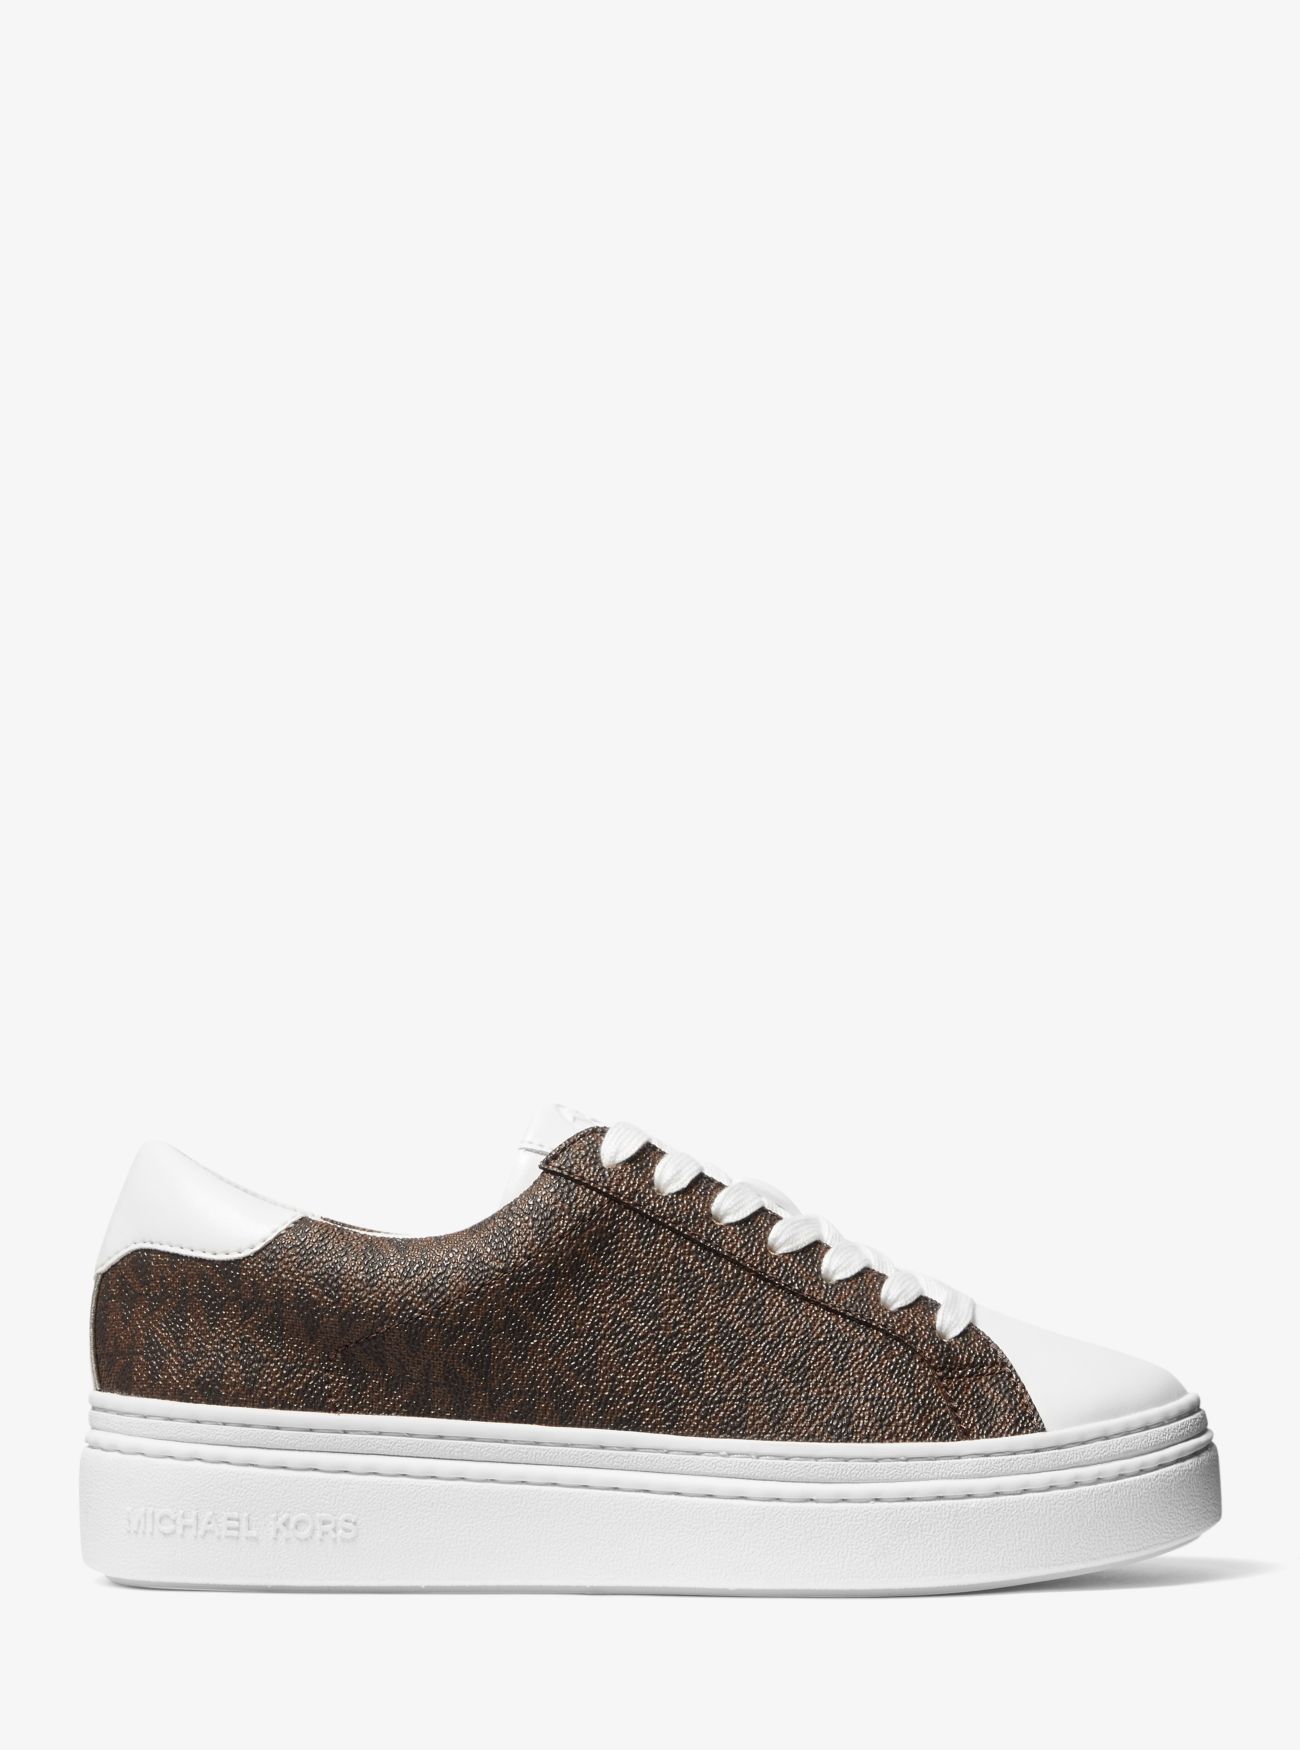 MK Chapman Faux Leather and Logo Sneaker - Brown - Michael Kors